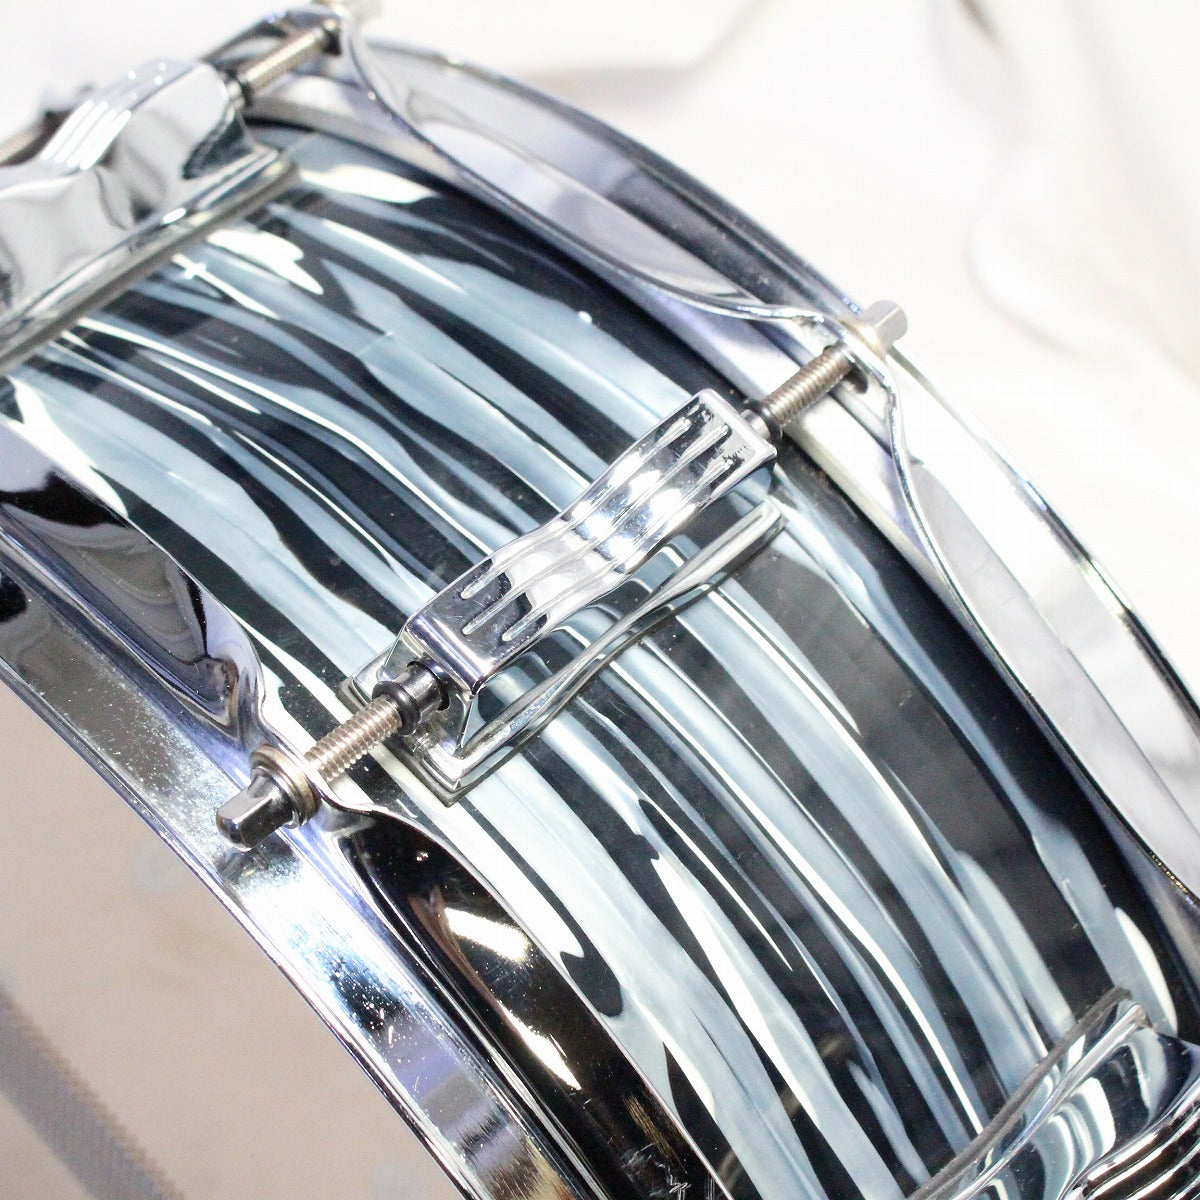 USED LUDWIG / LS401 14x5 Classic Maple Radic Snare Drum [08]